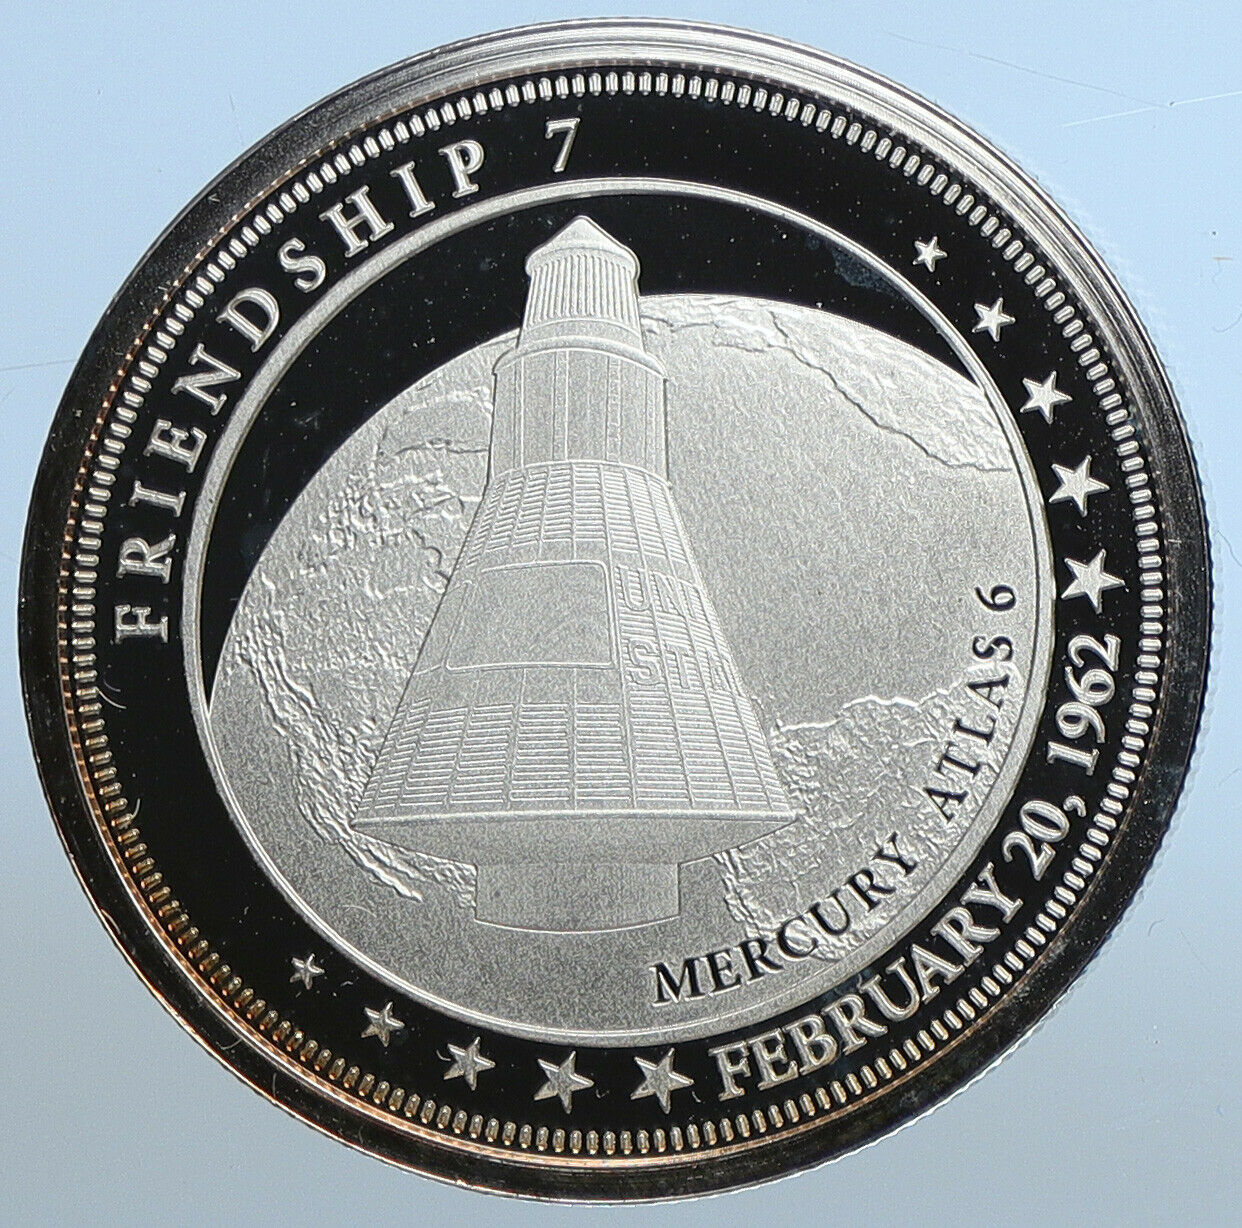 2017 FIJI Queen Elizabeth II FRIENDSHIP 7 NASA Space Misson Dollar Coin i111161